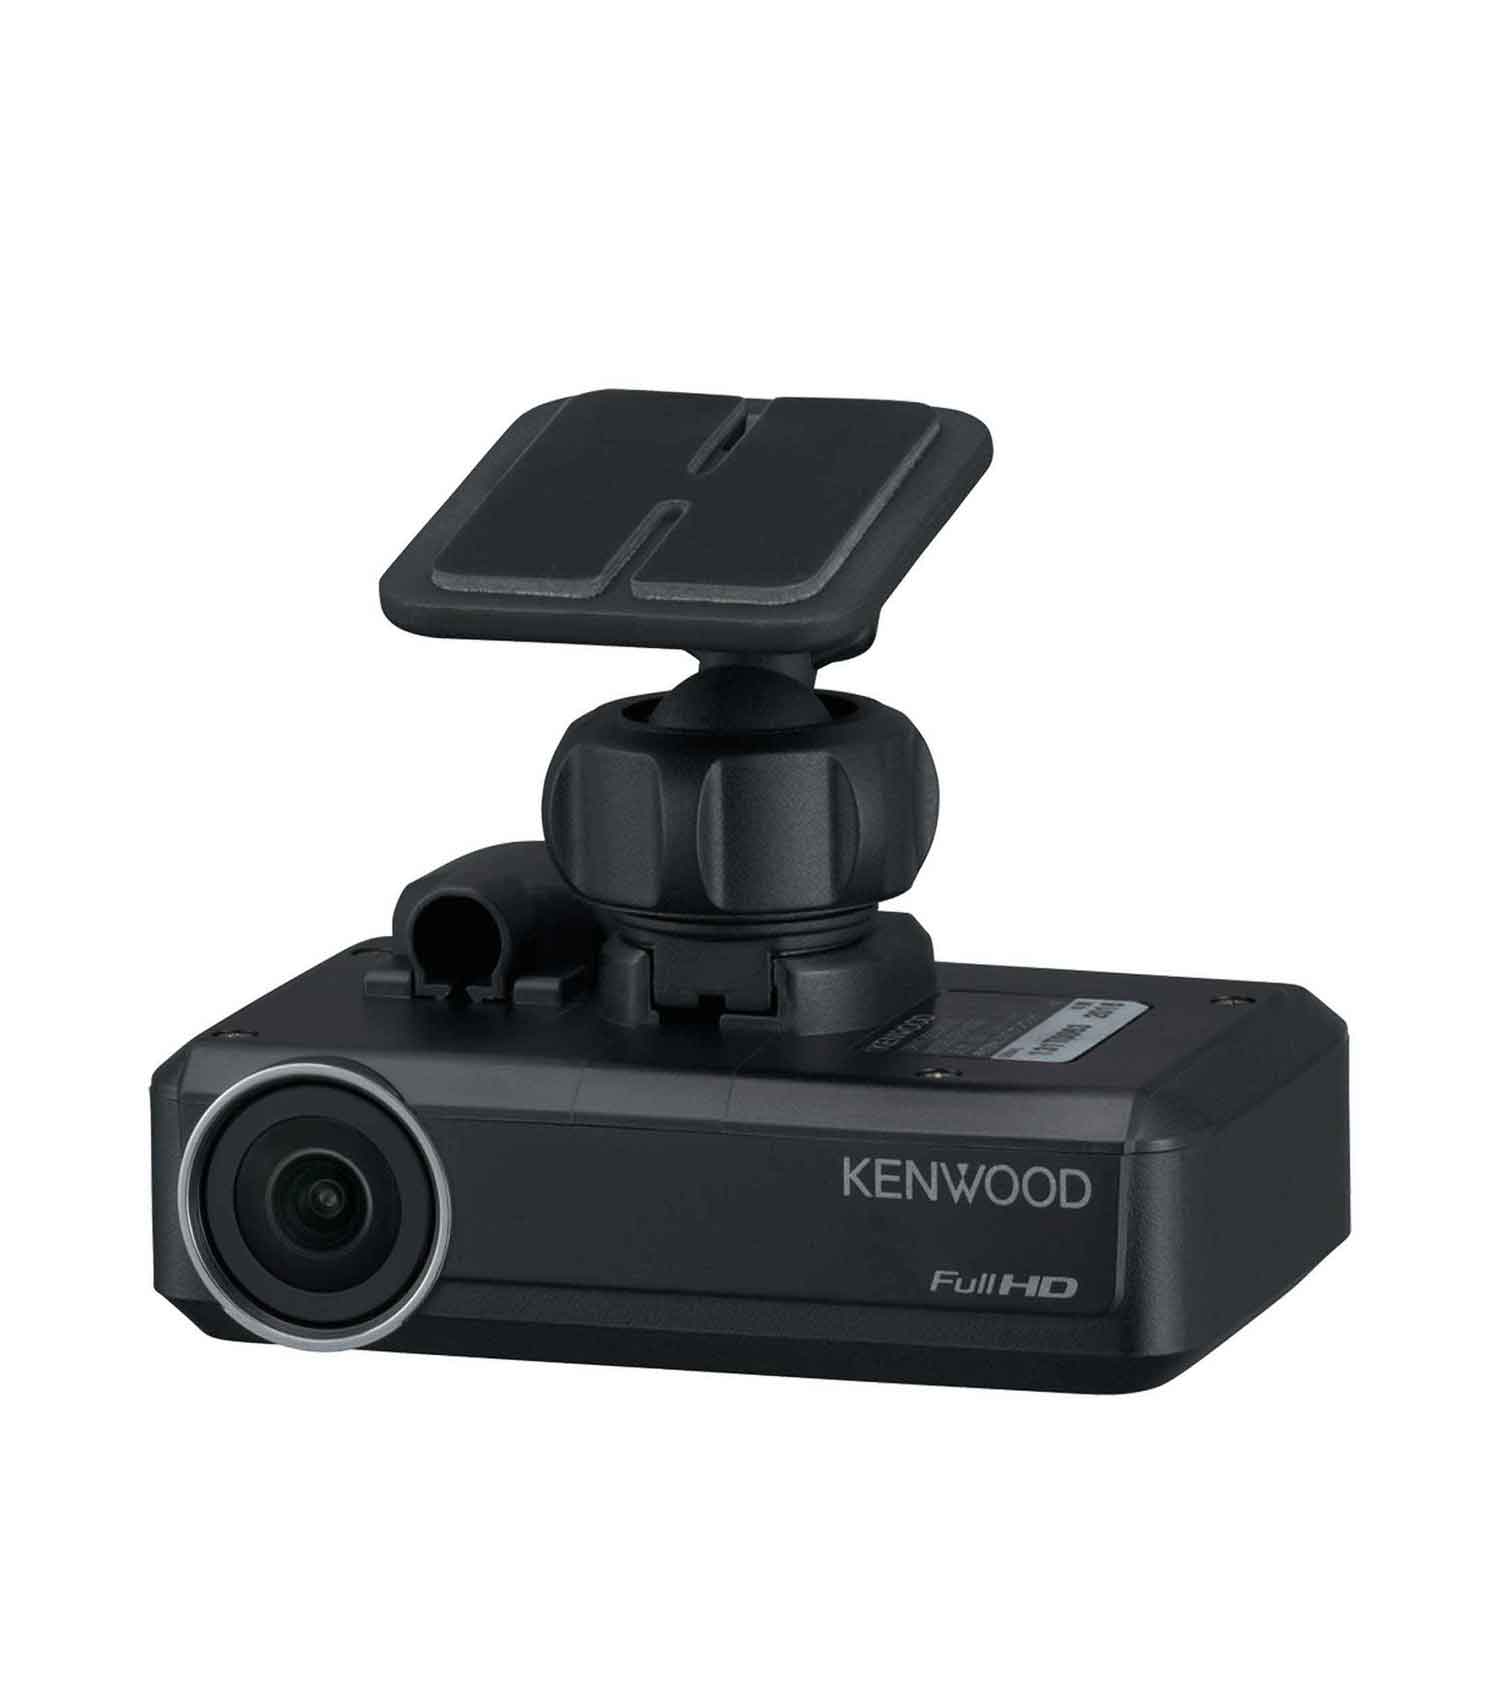 DRV-N520 integrated dashboard camera